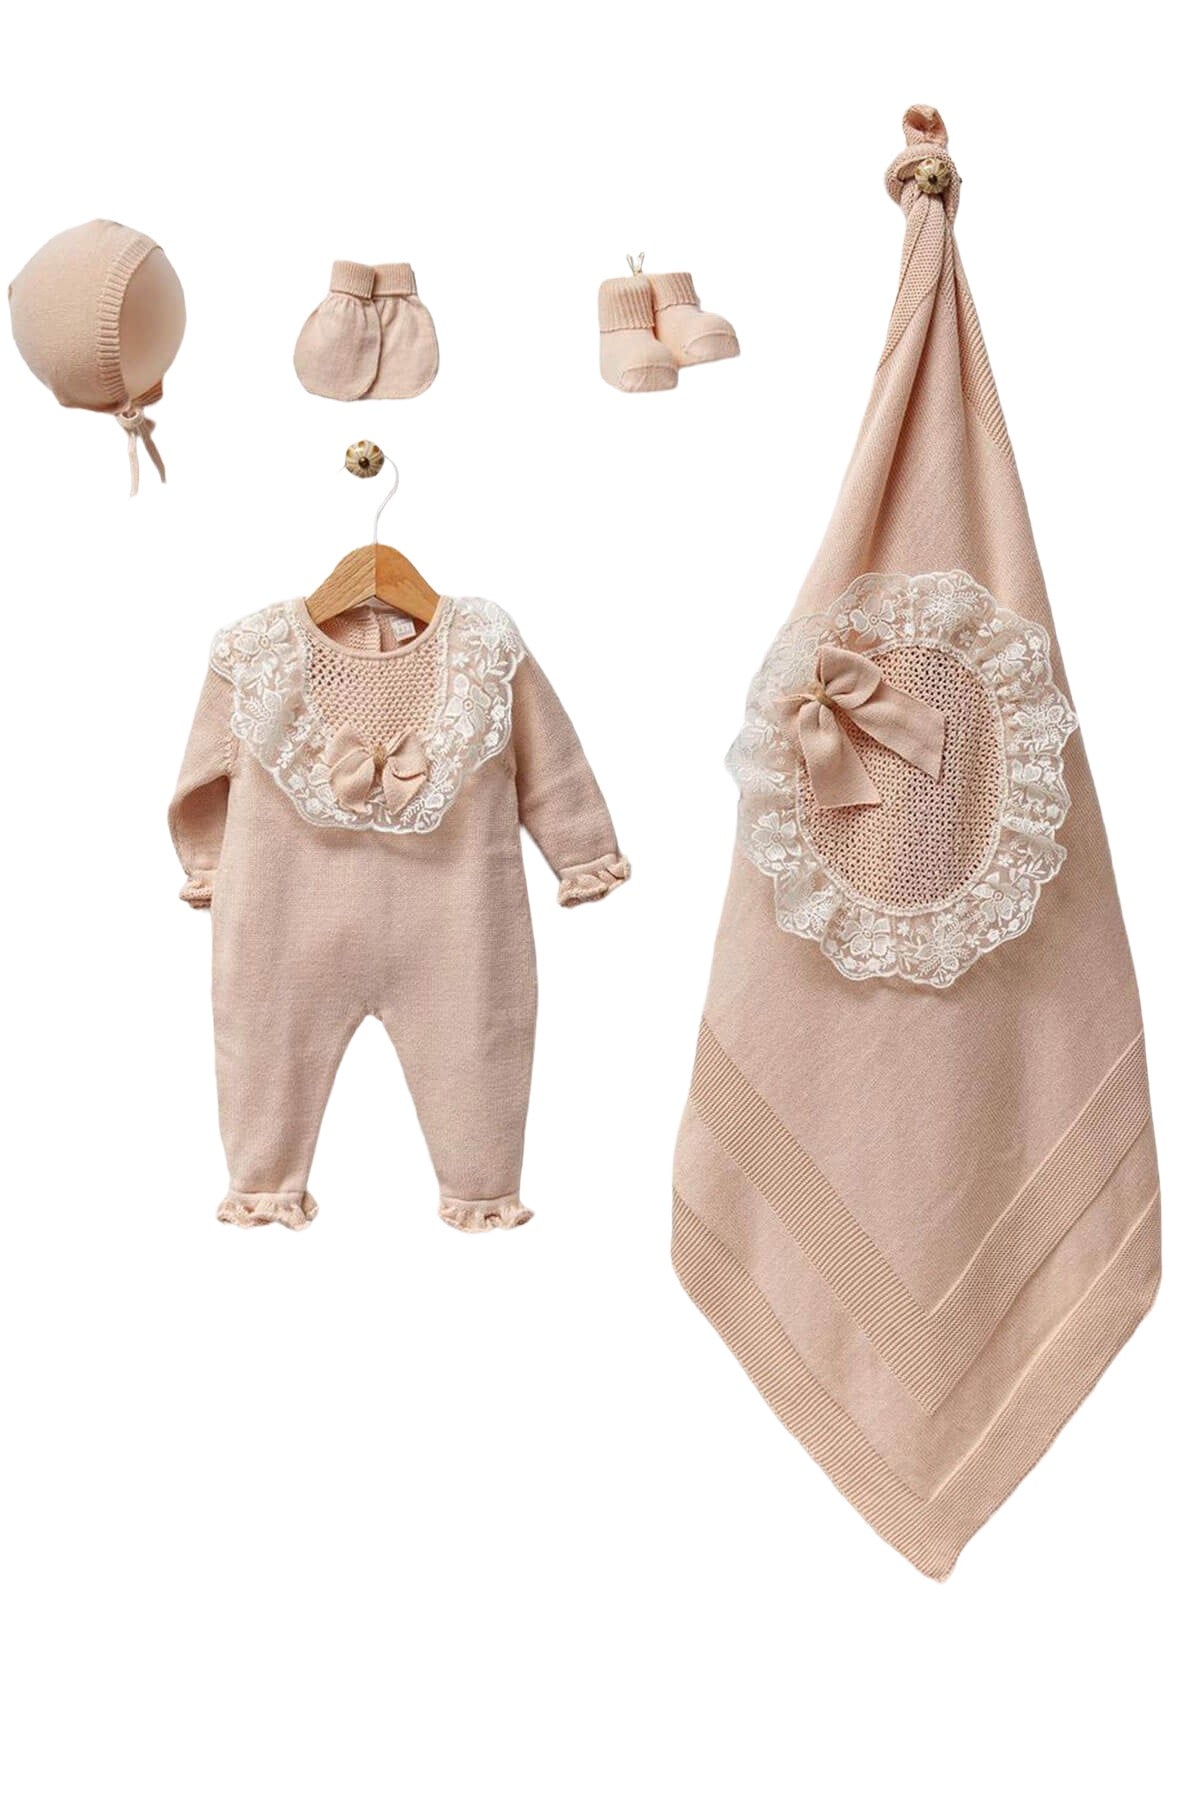 Nora Beige Newborn Knitwear Coming Home Set (5 Pcs)